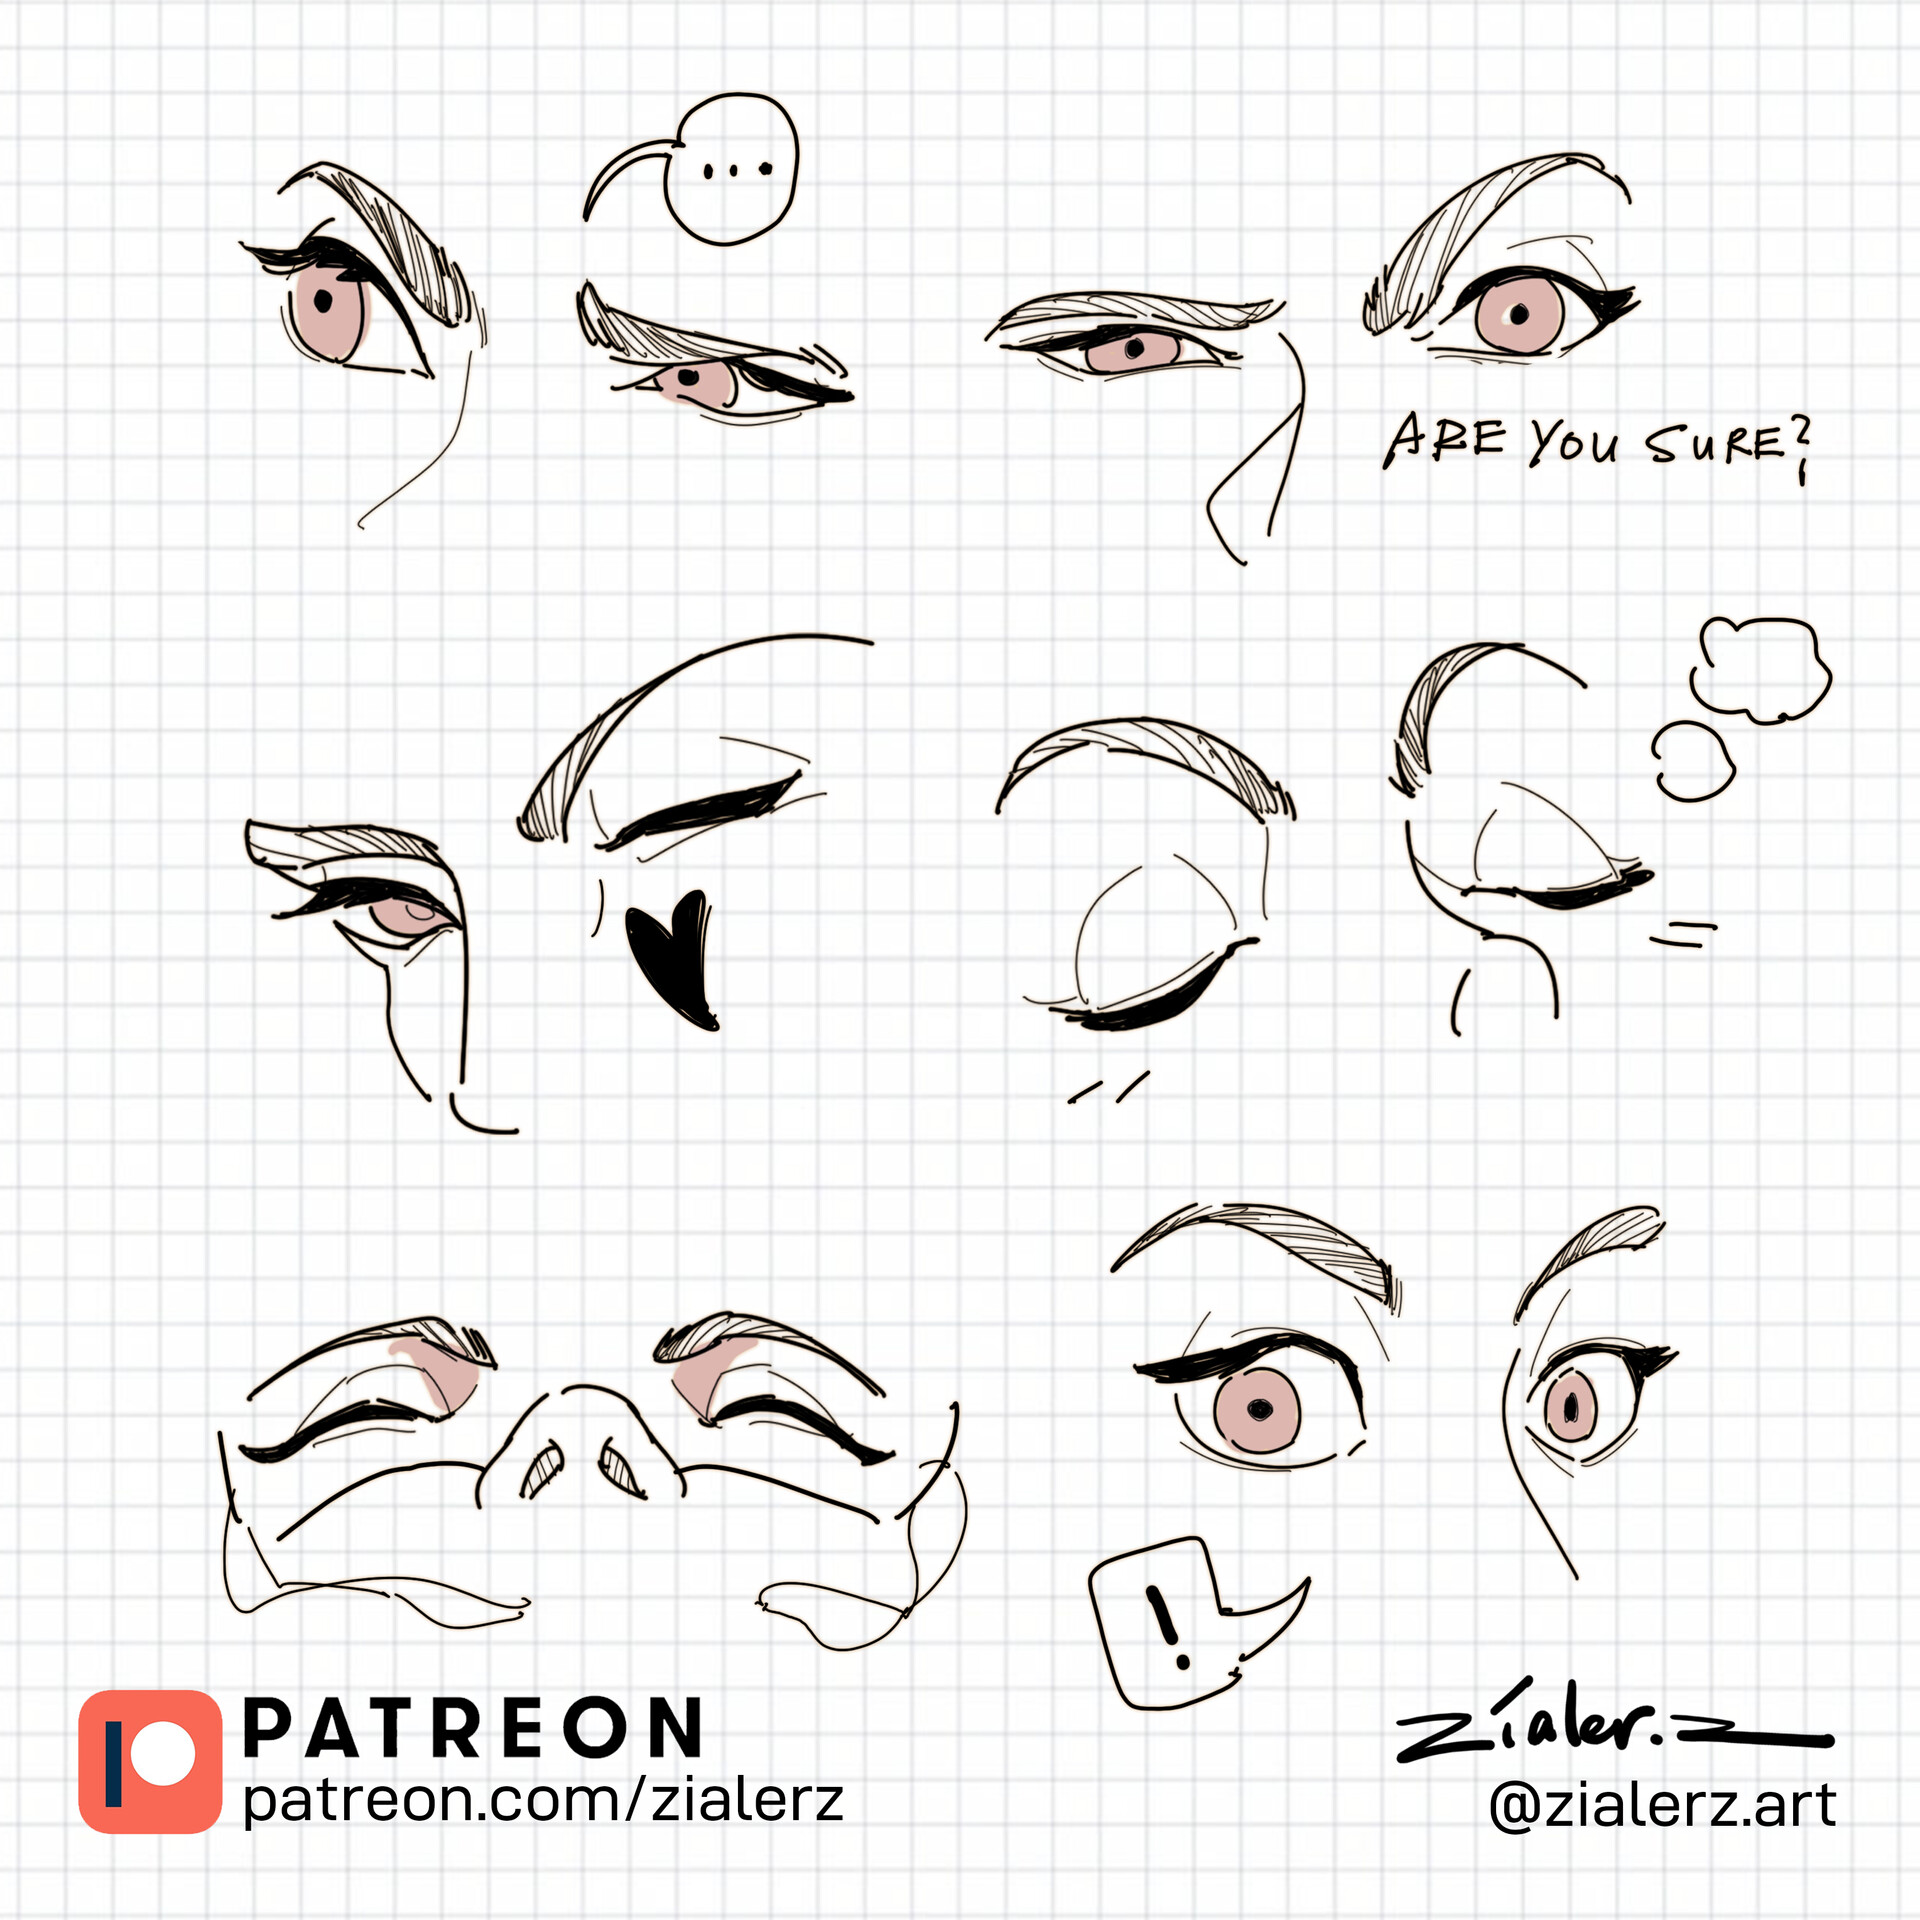 ARTIONE How To Draw Anime Eyes Stock Illustration - Illustration